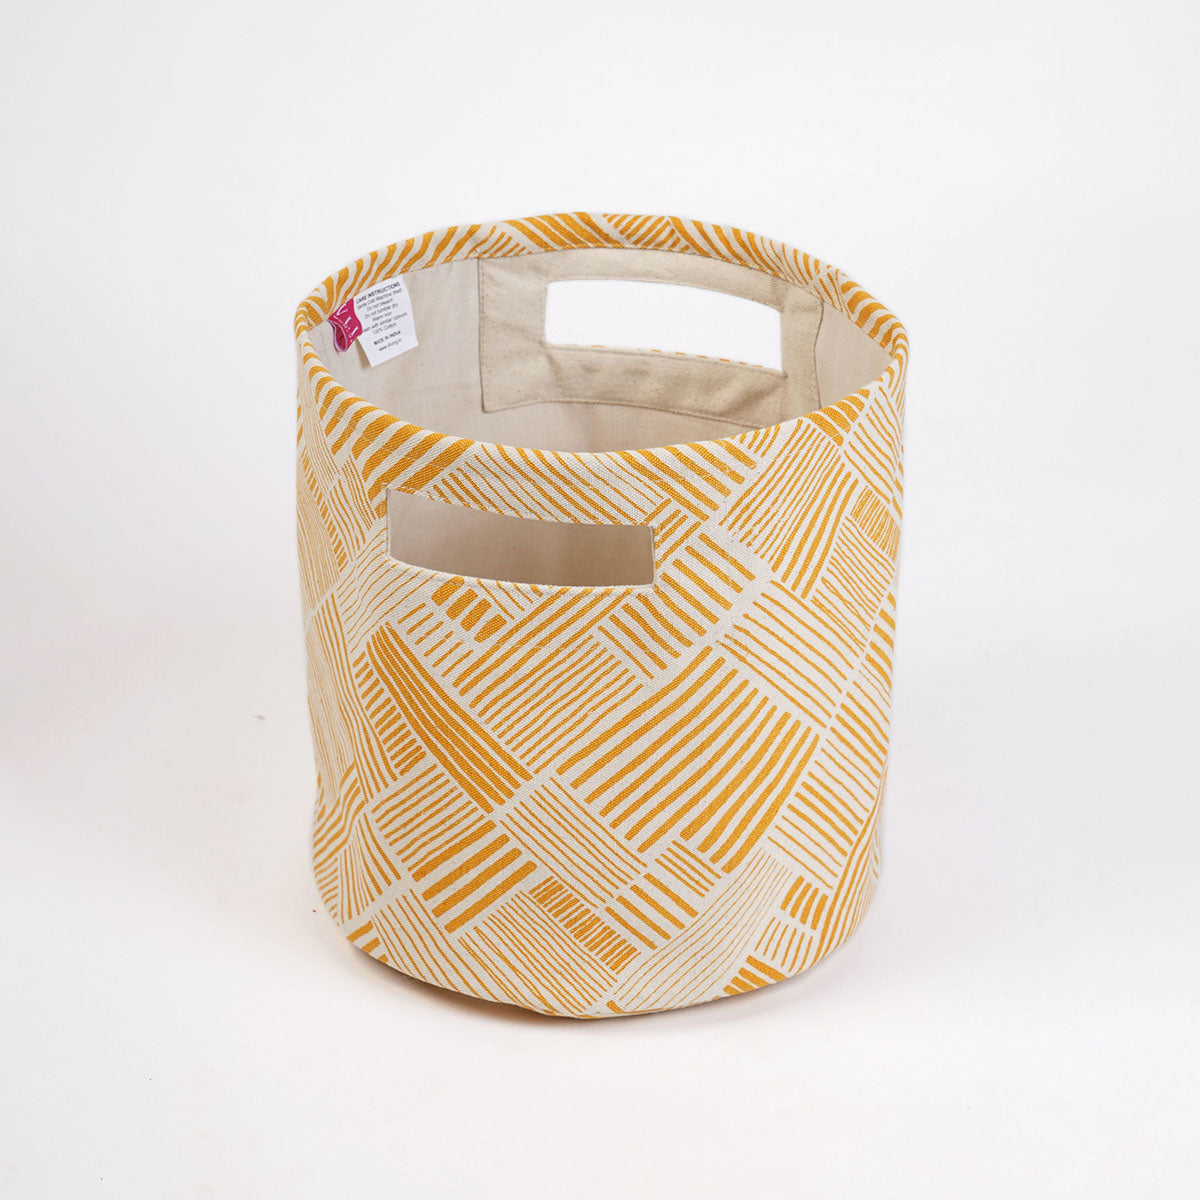 MODERN RETRO - Canvas basket, mustard yellow stipe print, storage basket, fabric bin, sizes available